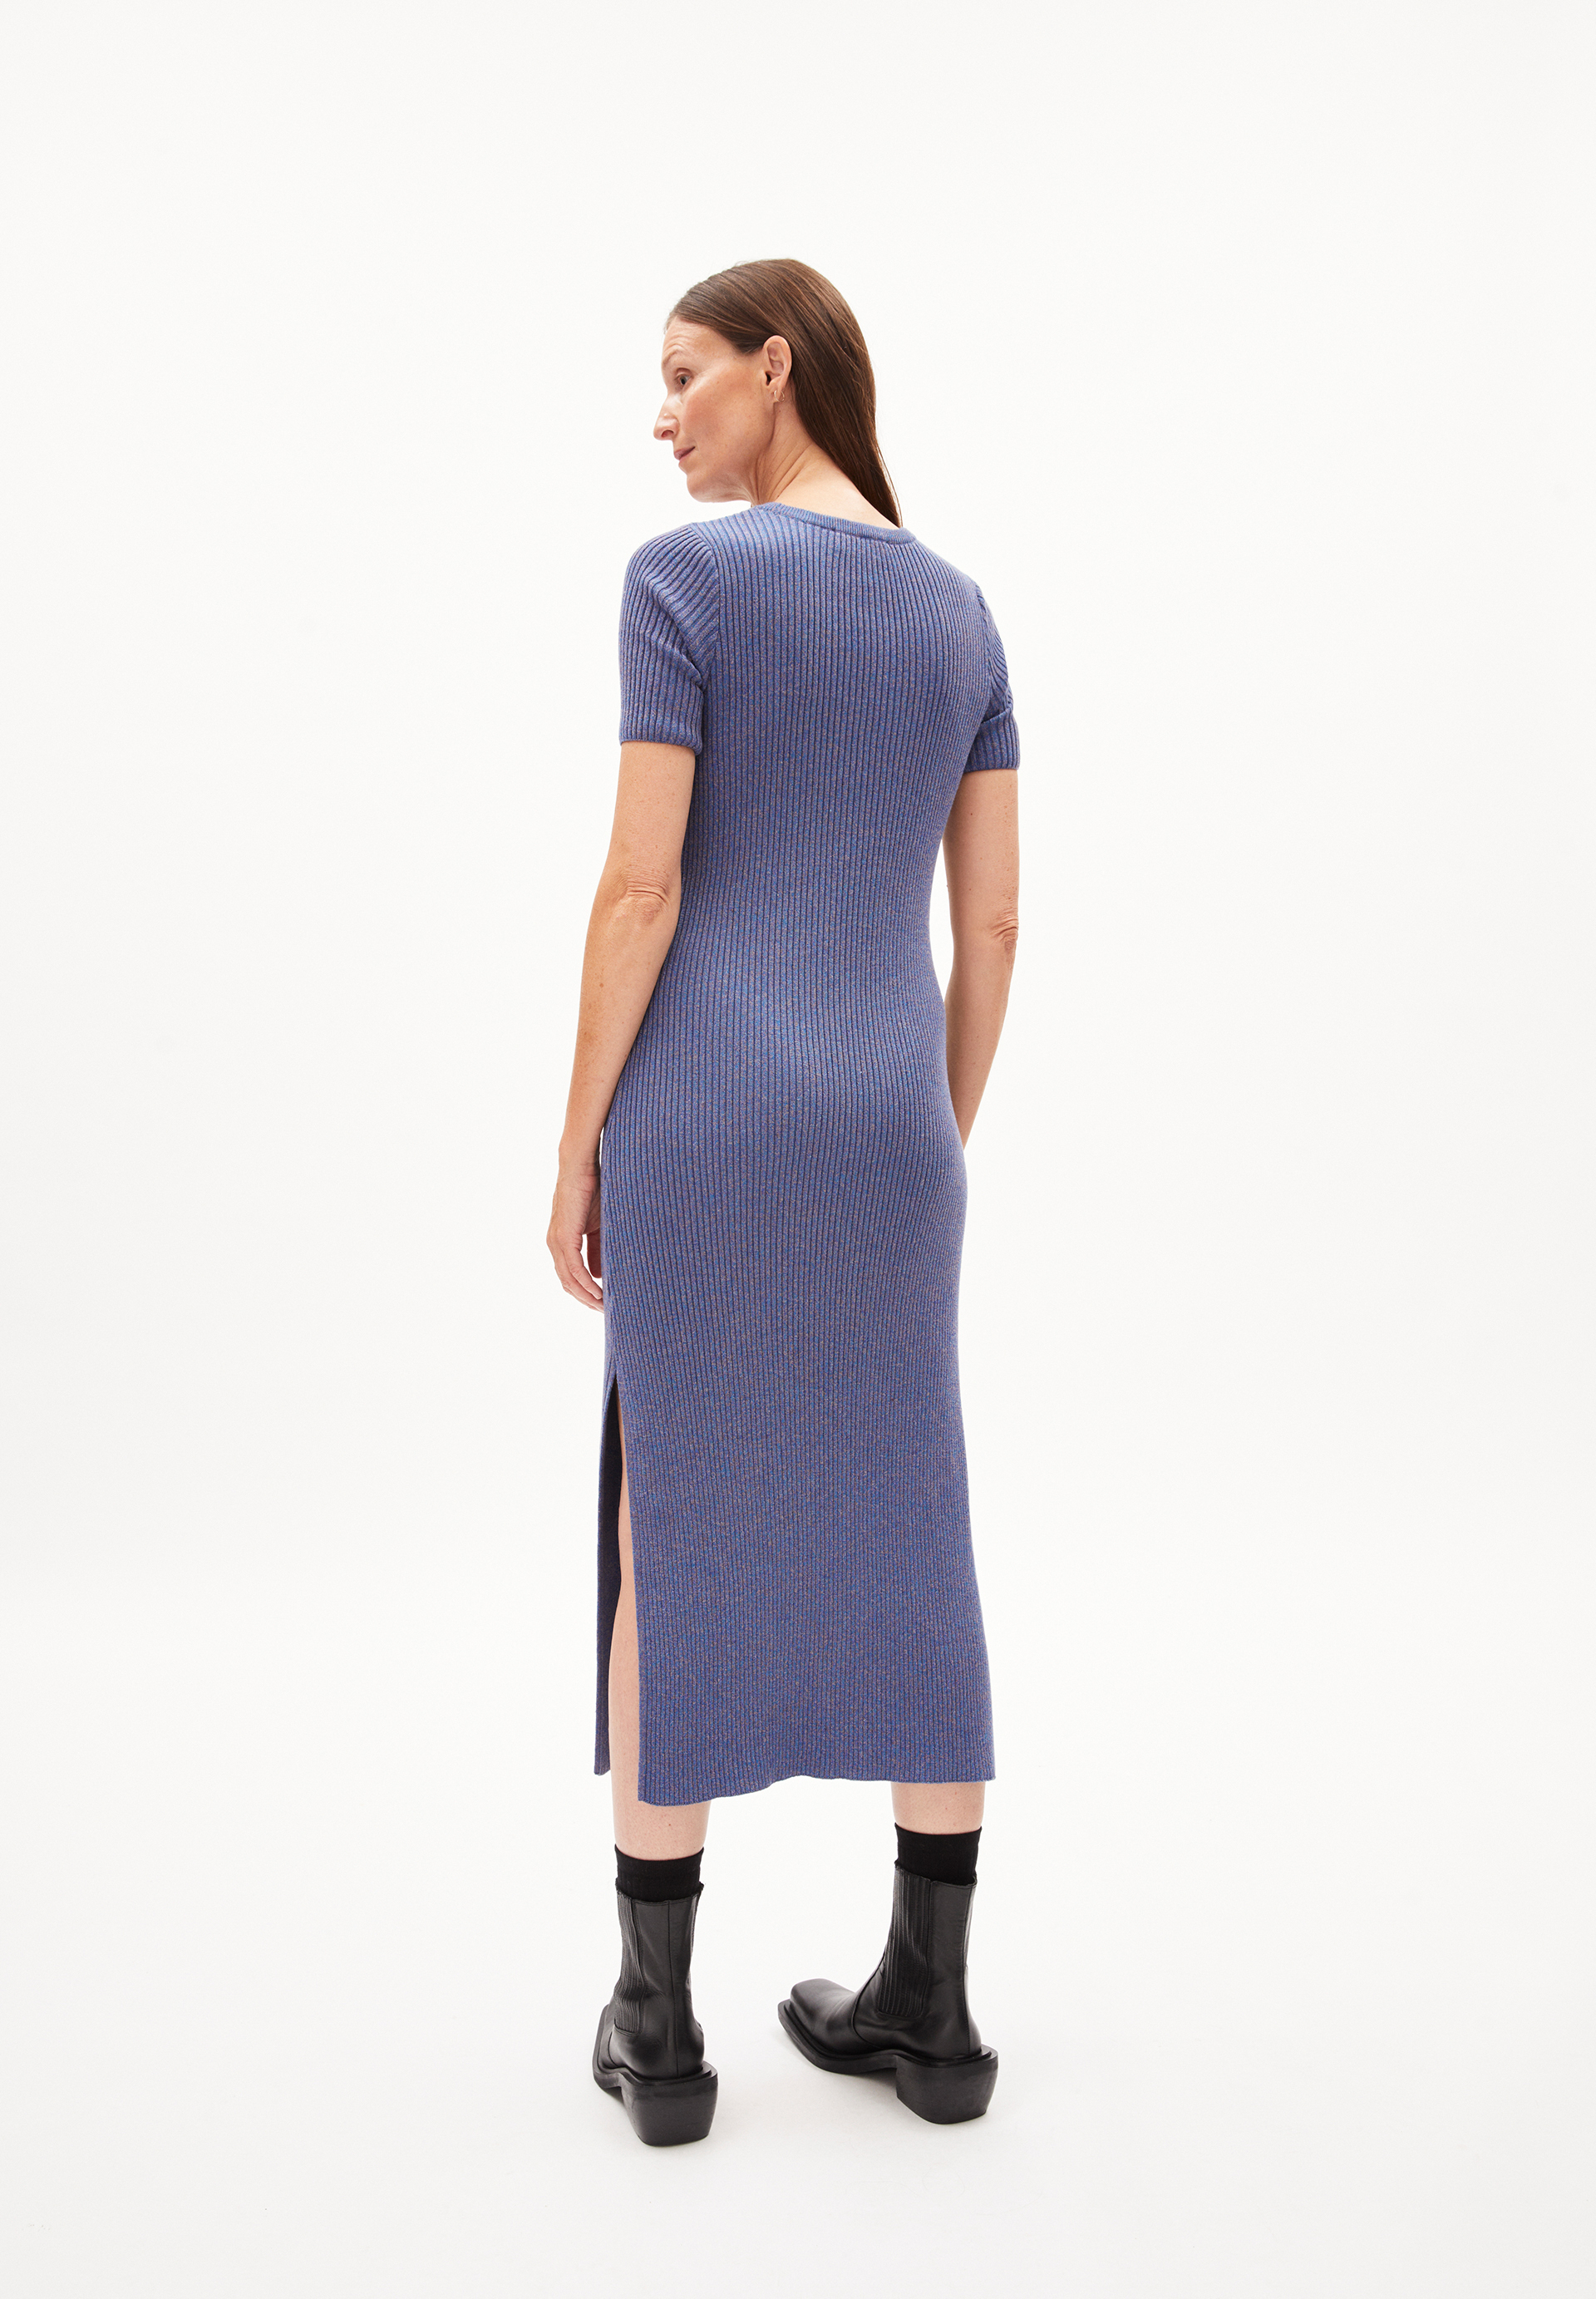 ELAINAAS Knit Dress Slim Fit made of Organic Cotton Mix